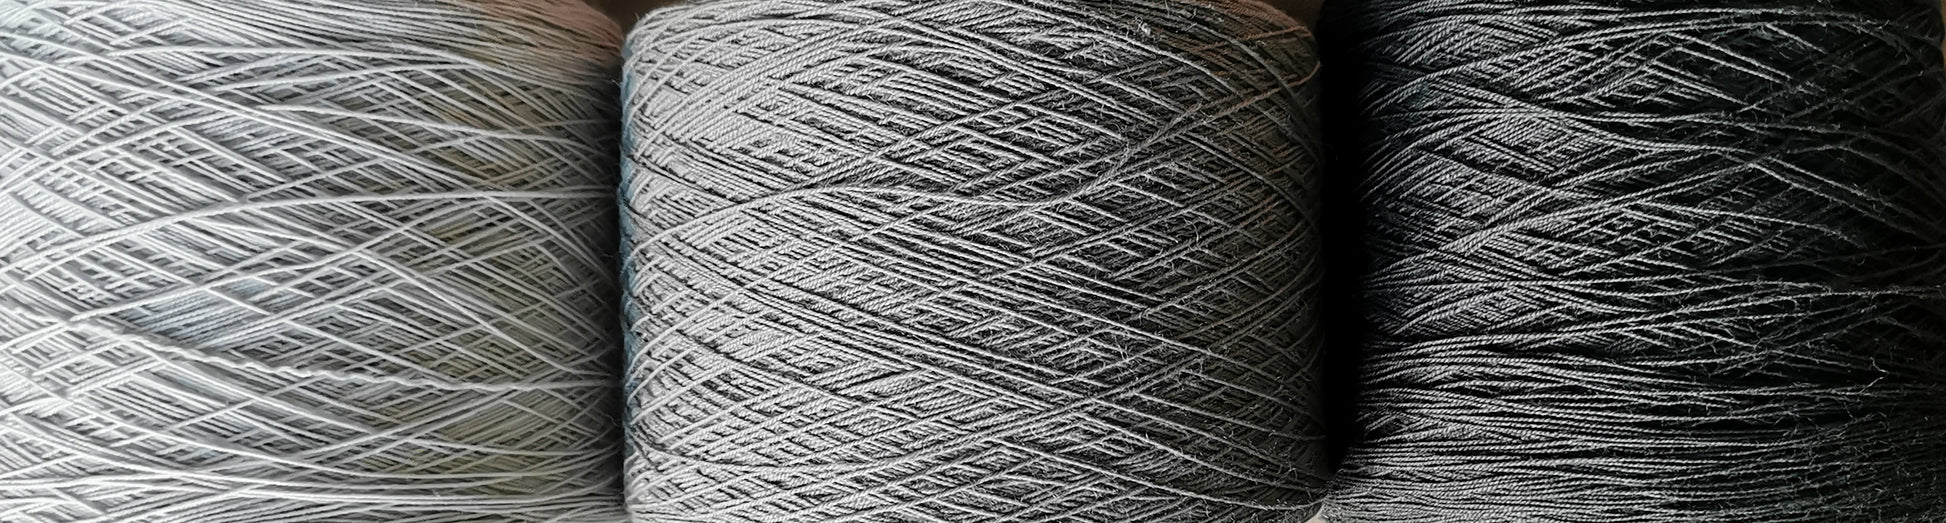 wool/nylon blend yarn in grey – Blooming Yarns by KW